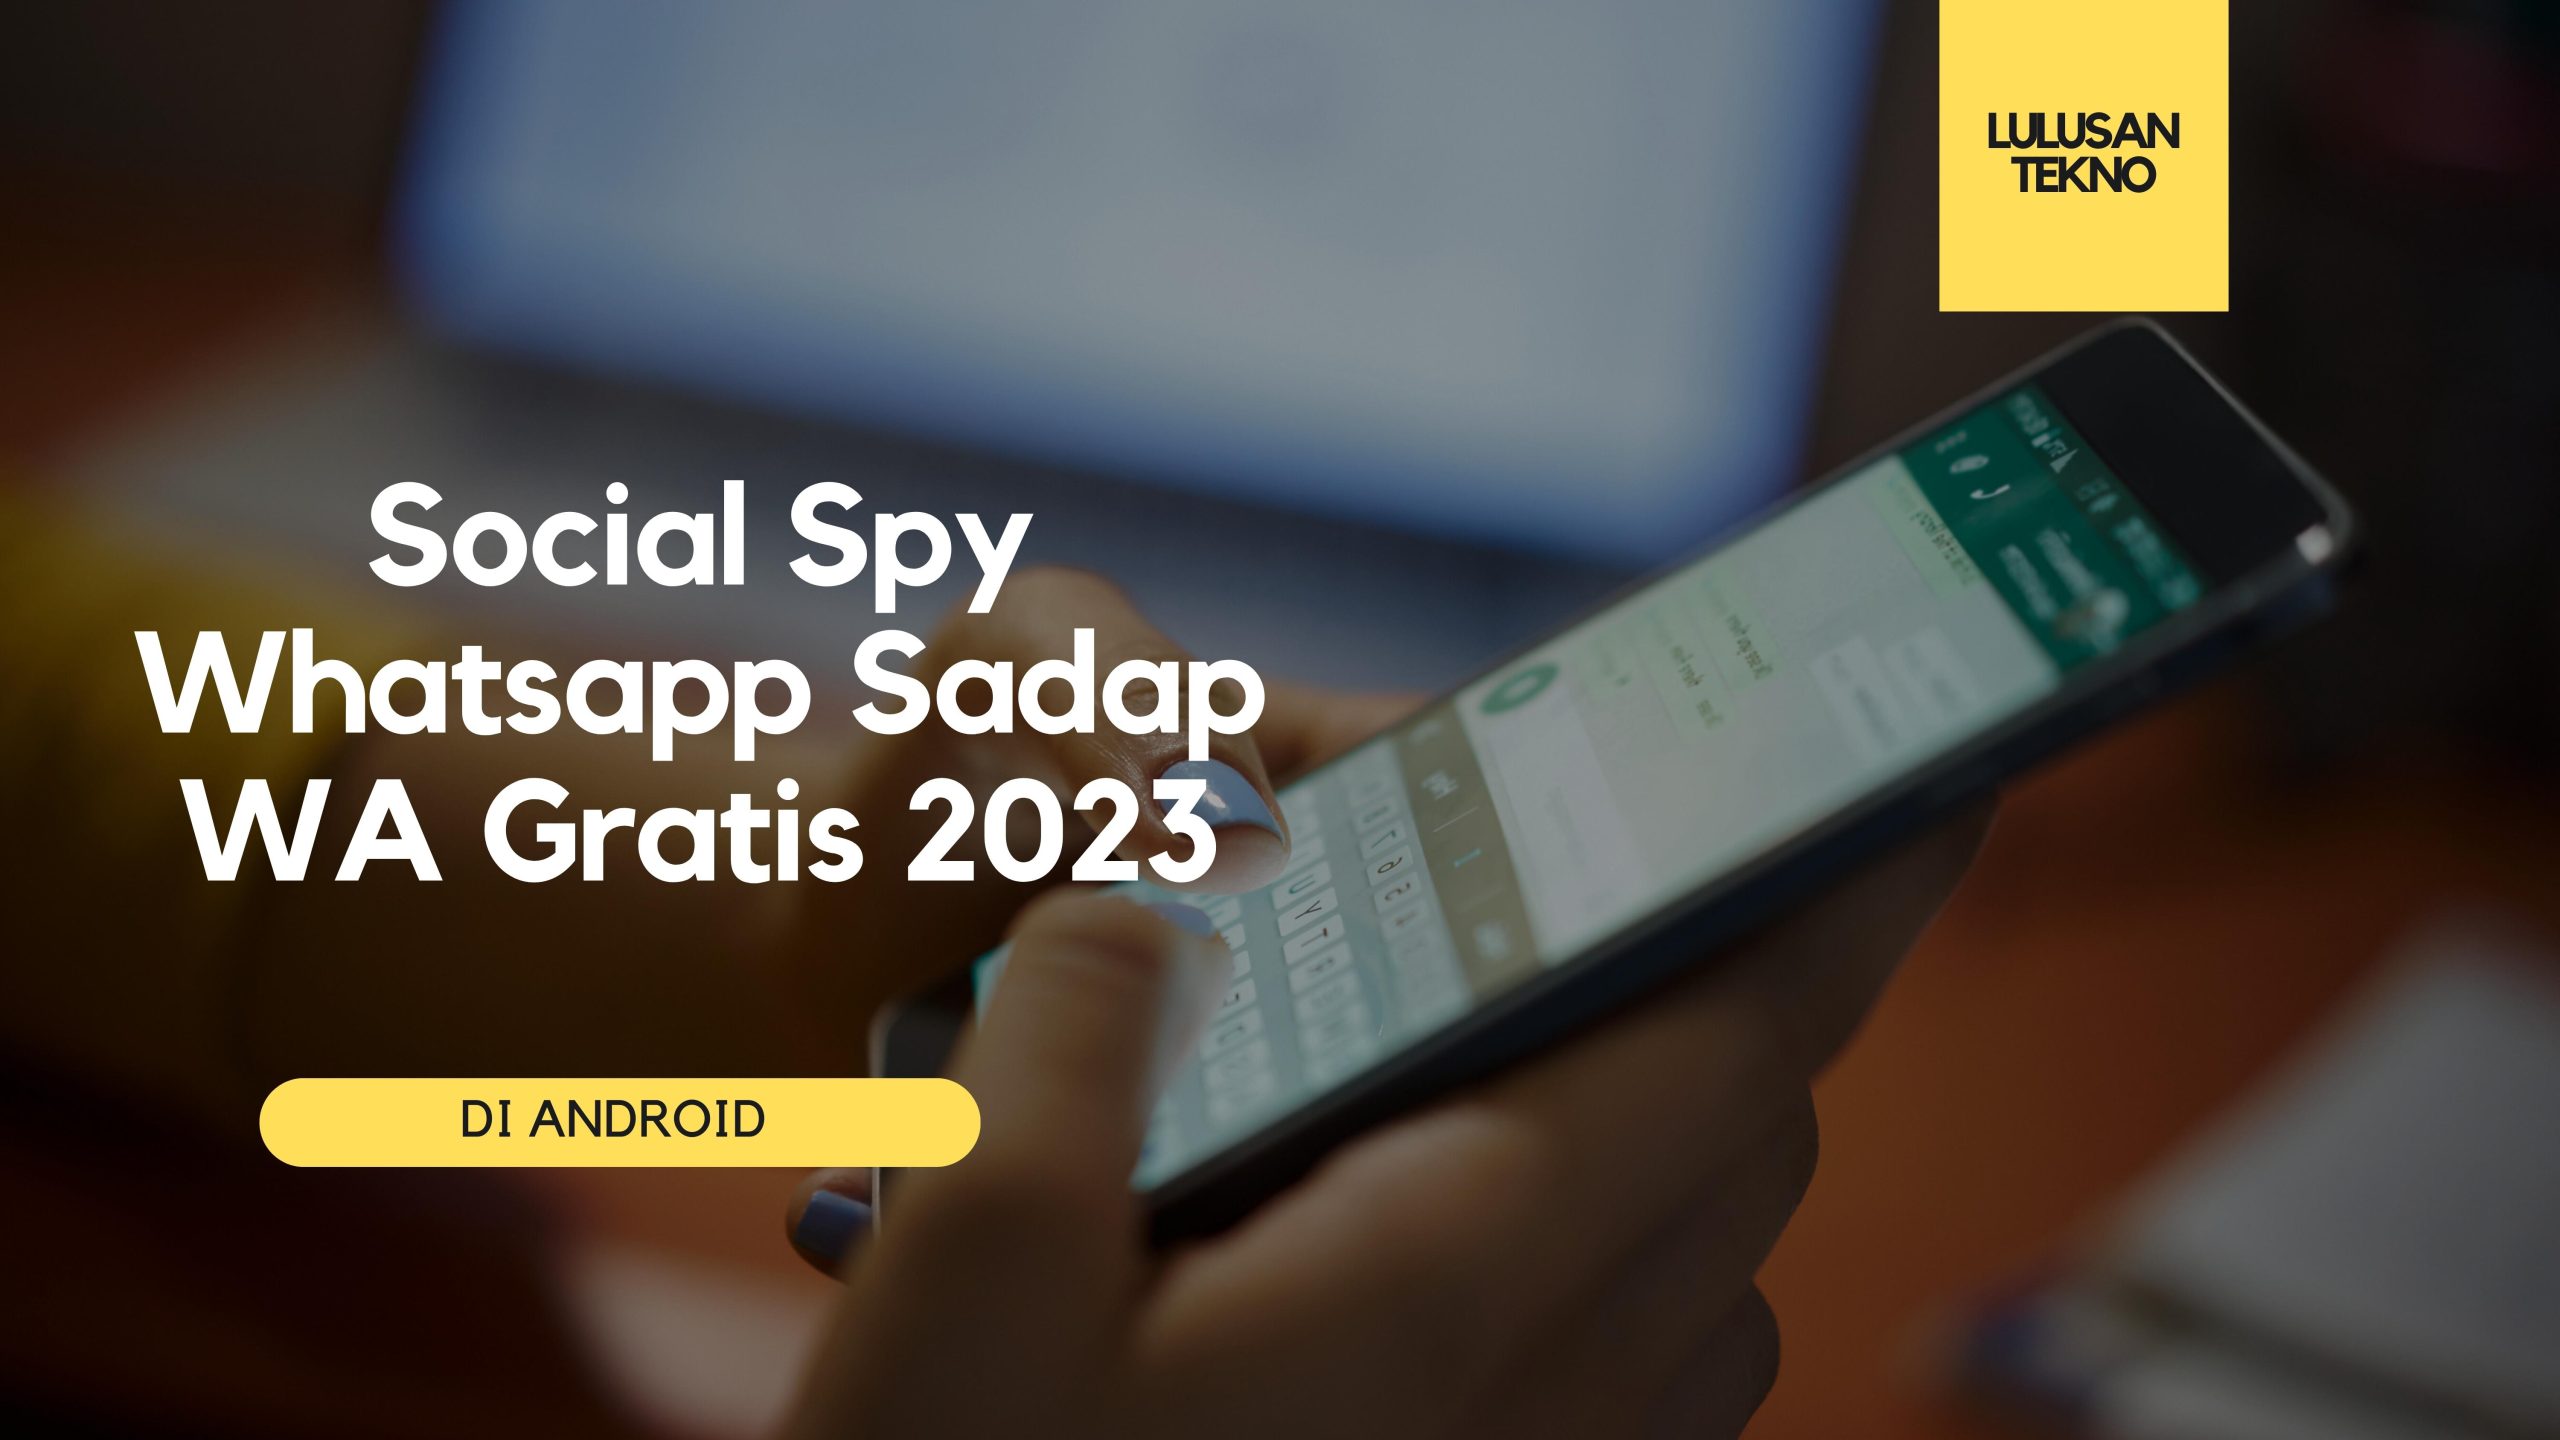 Social Spy Whatsapp Sadap WA Gratis 2023